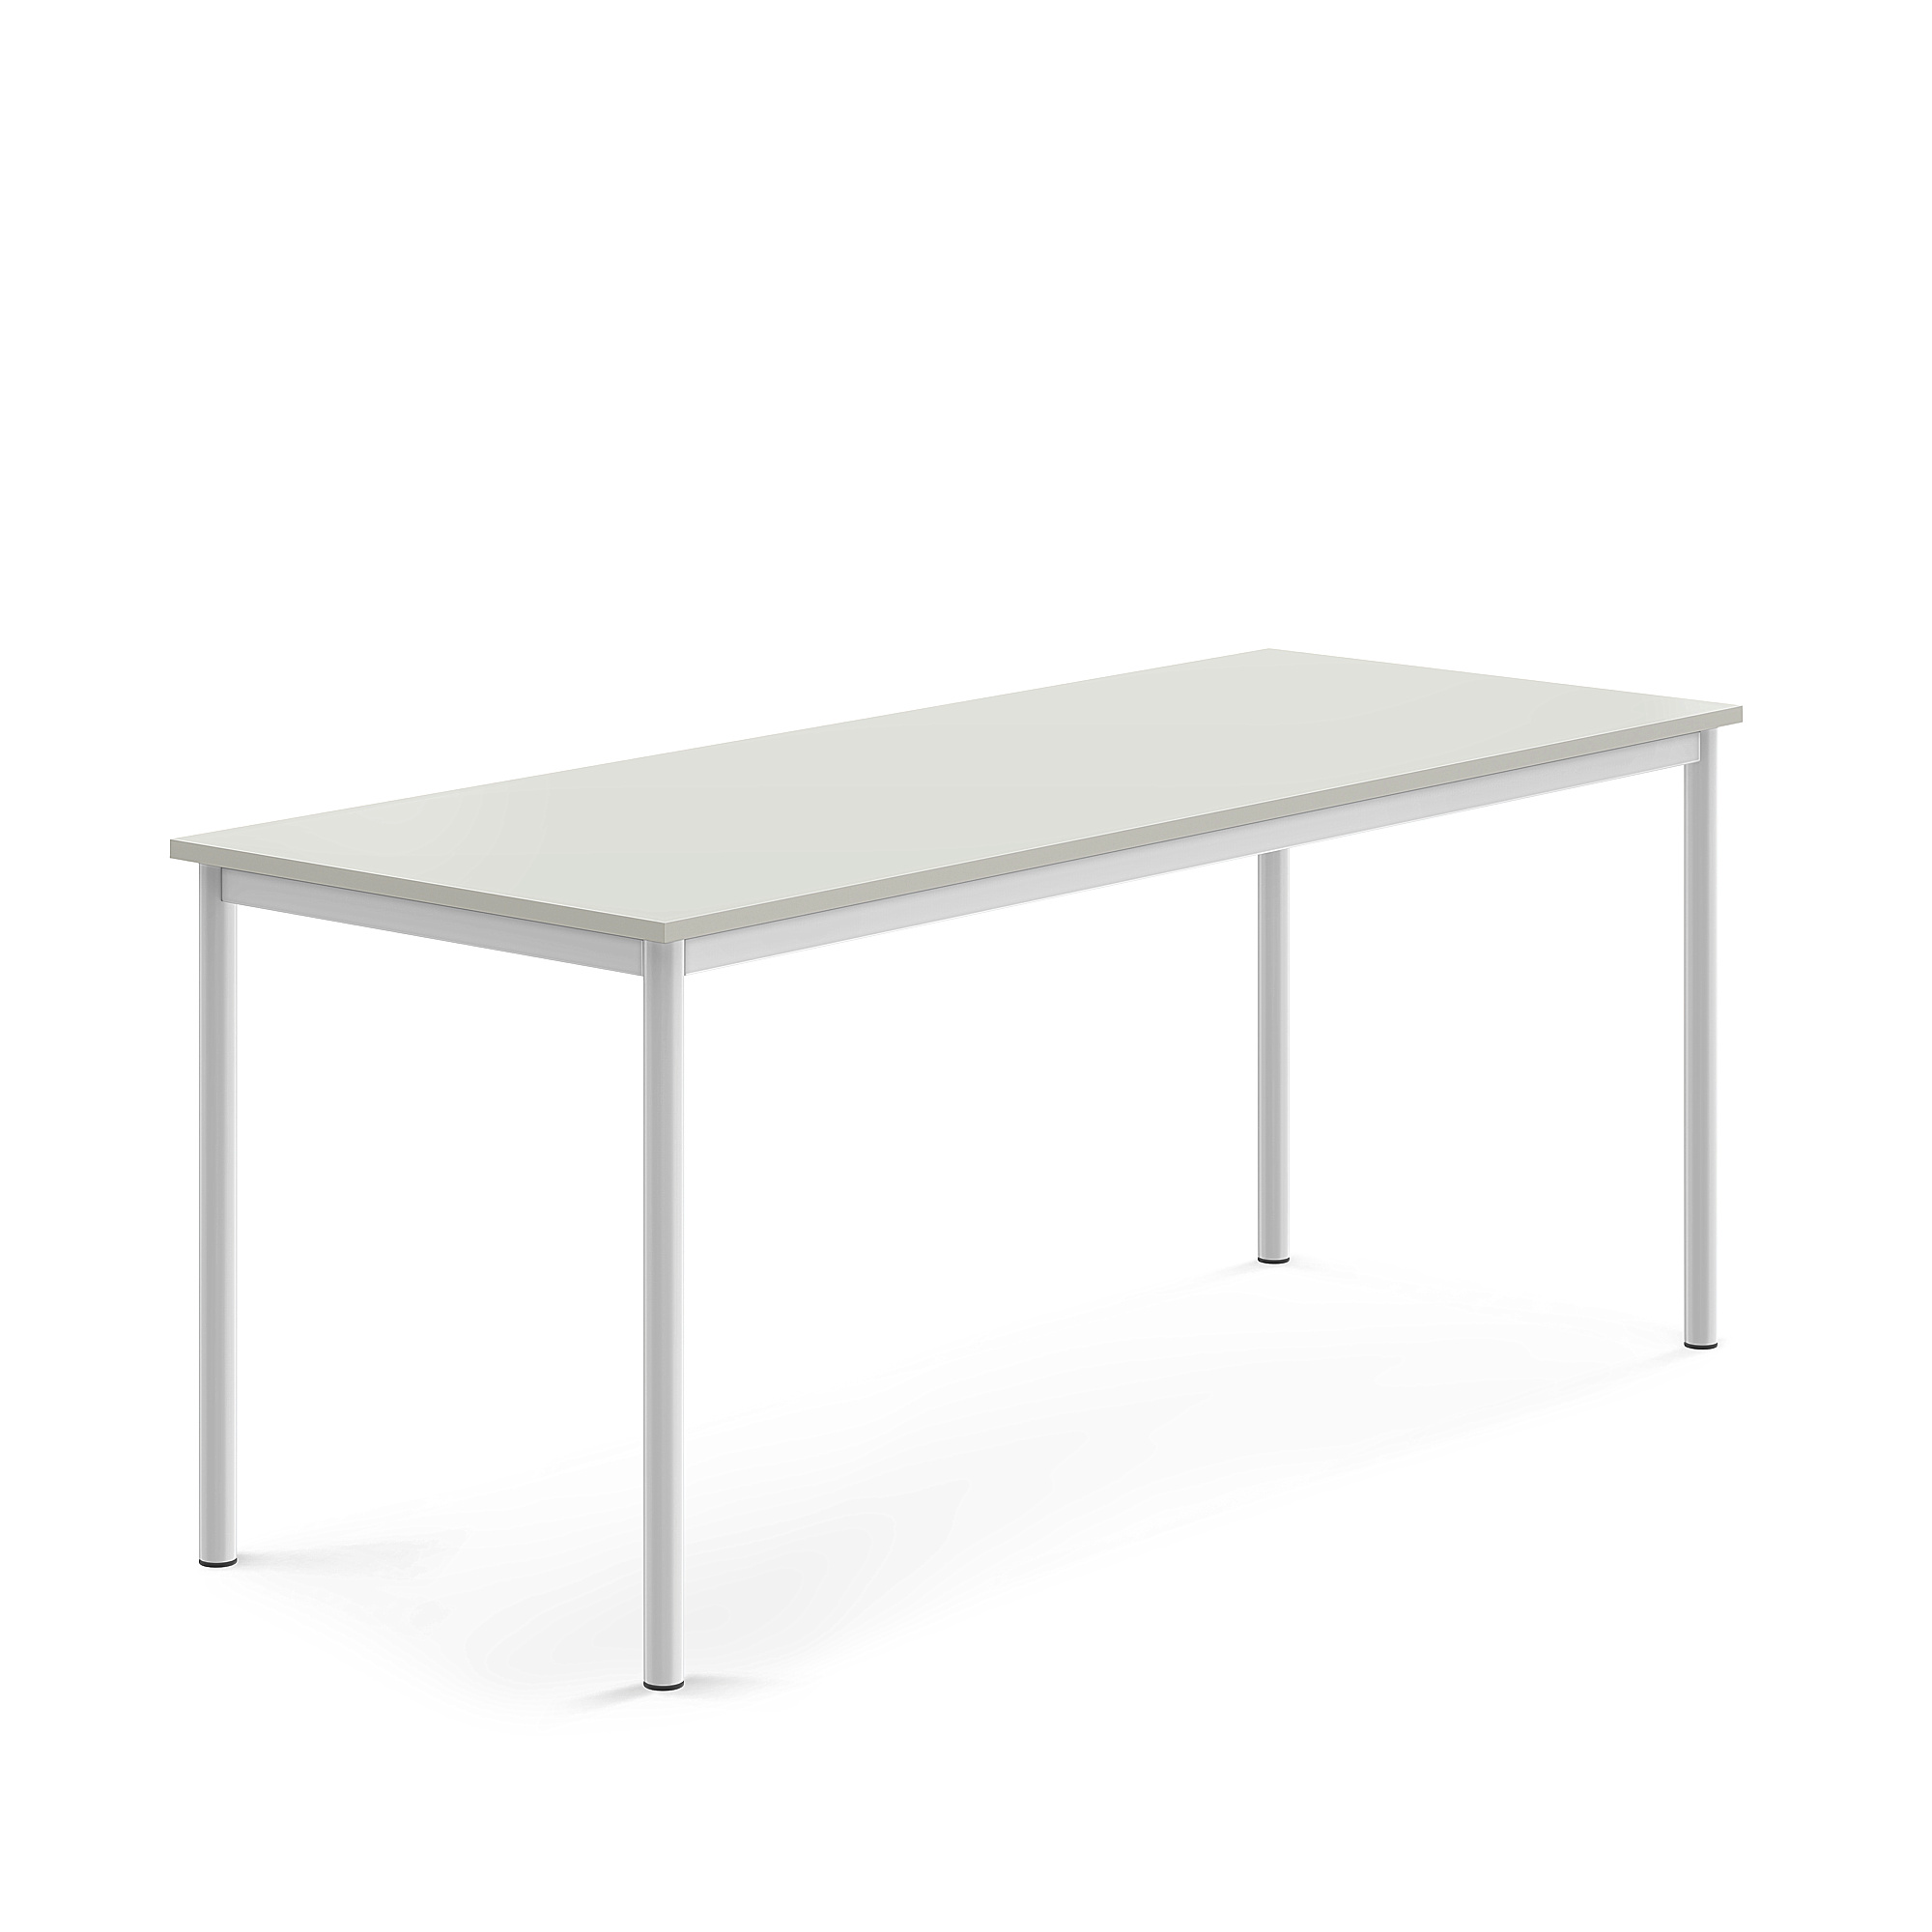 Stůl BORÅS, 1800x700x720 mm, bílé nohy, HPL deska, šedá